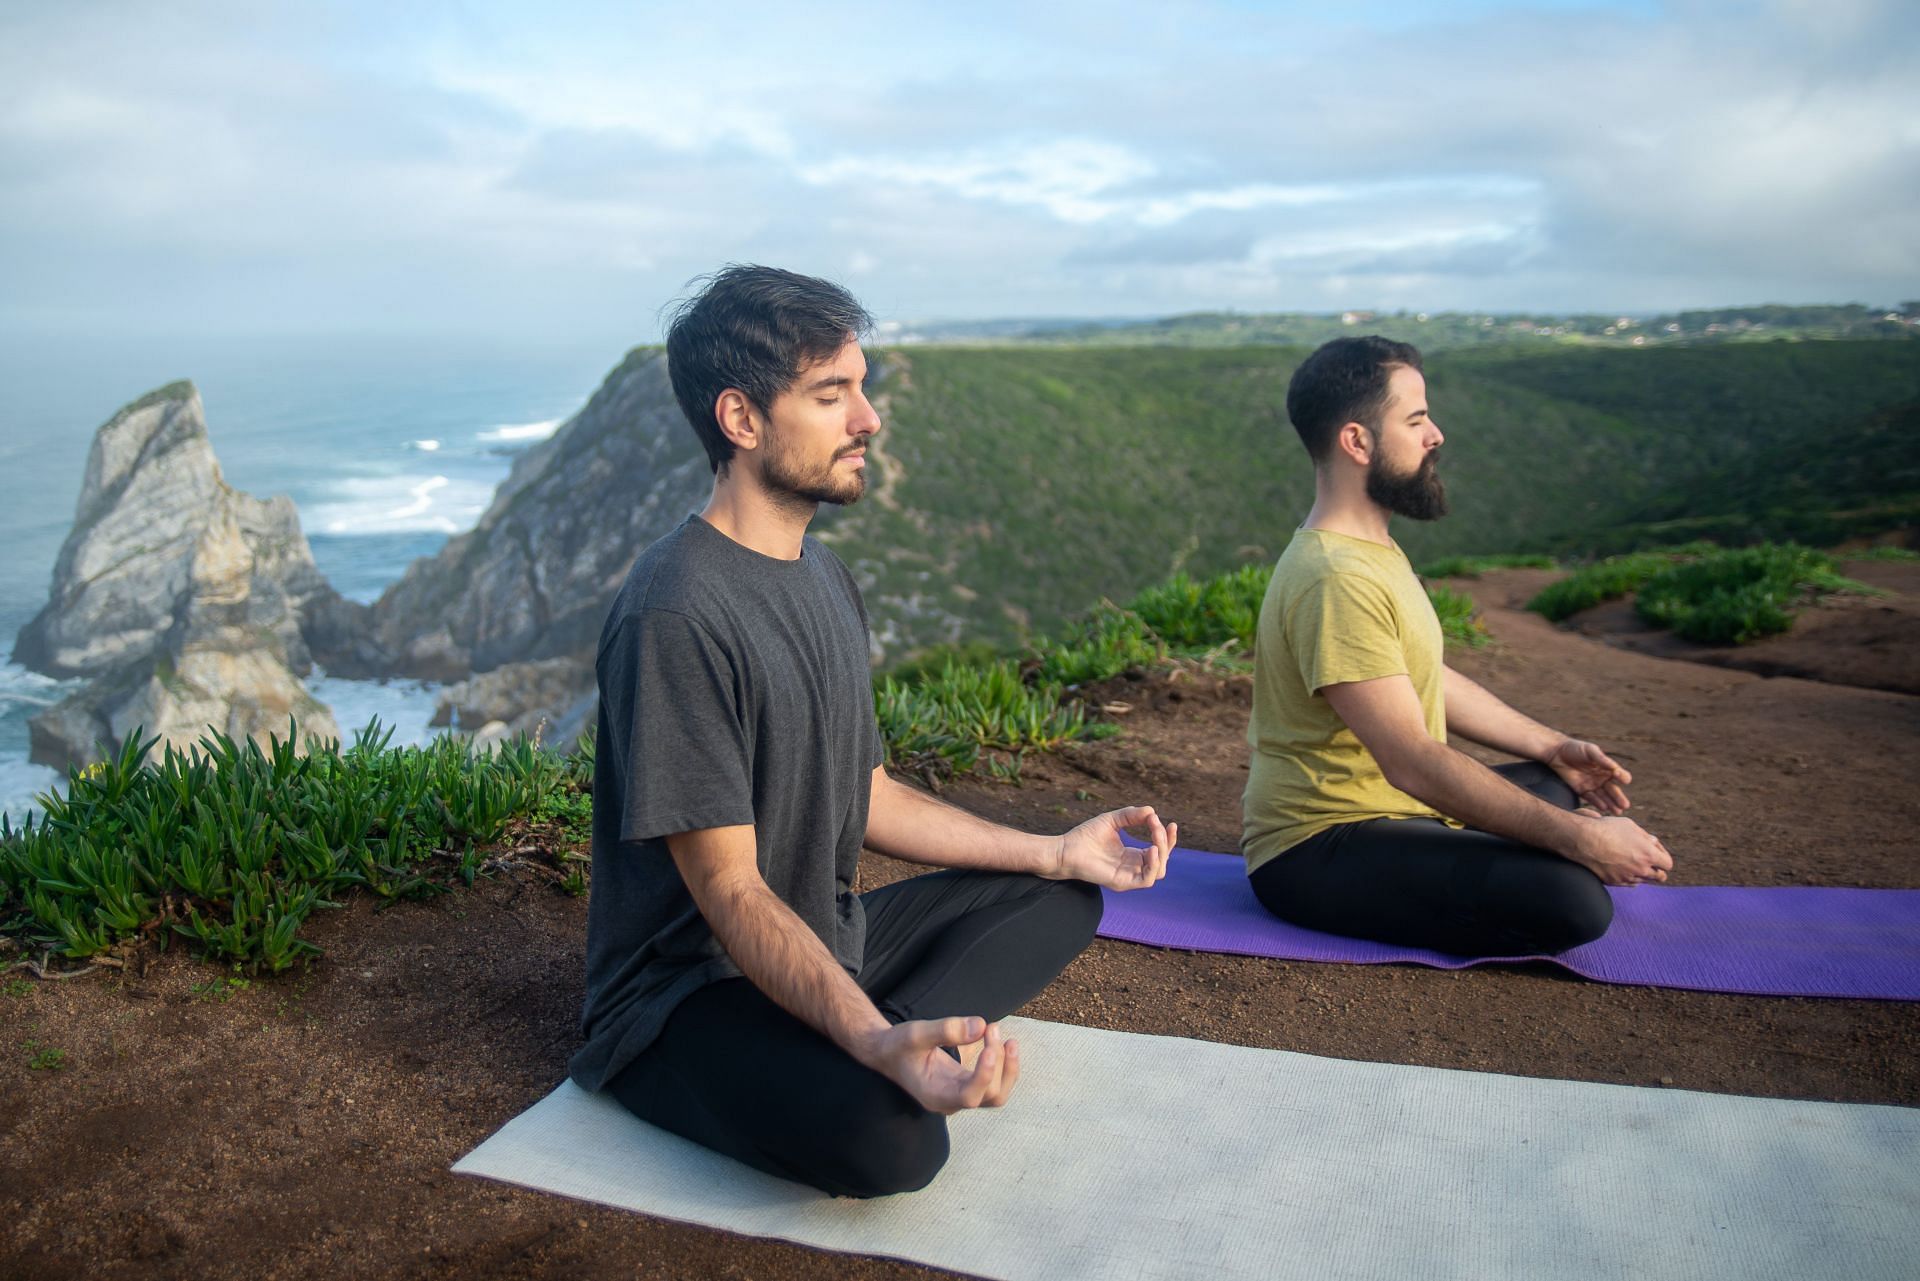 Kundalini yoga involves a lot of breath work. (Image via Pexels/Kampus Production)